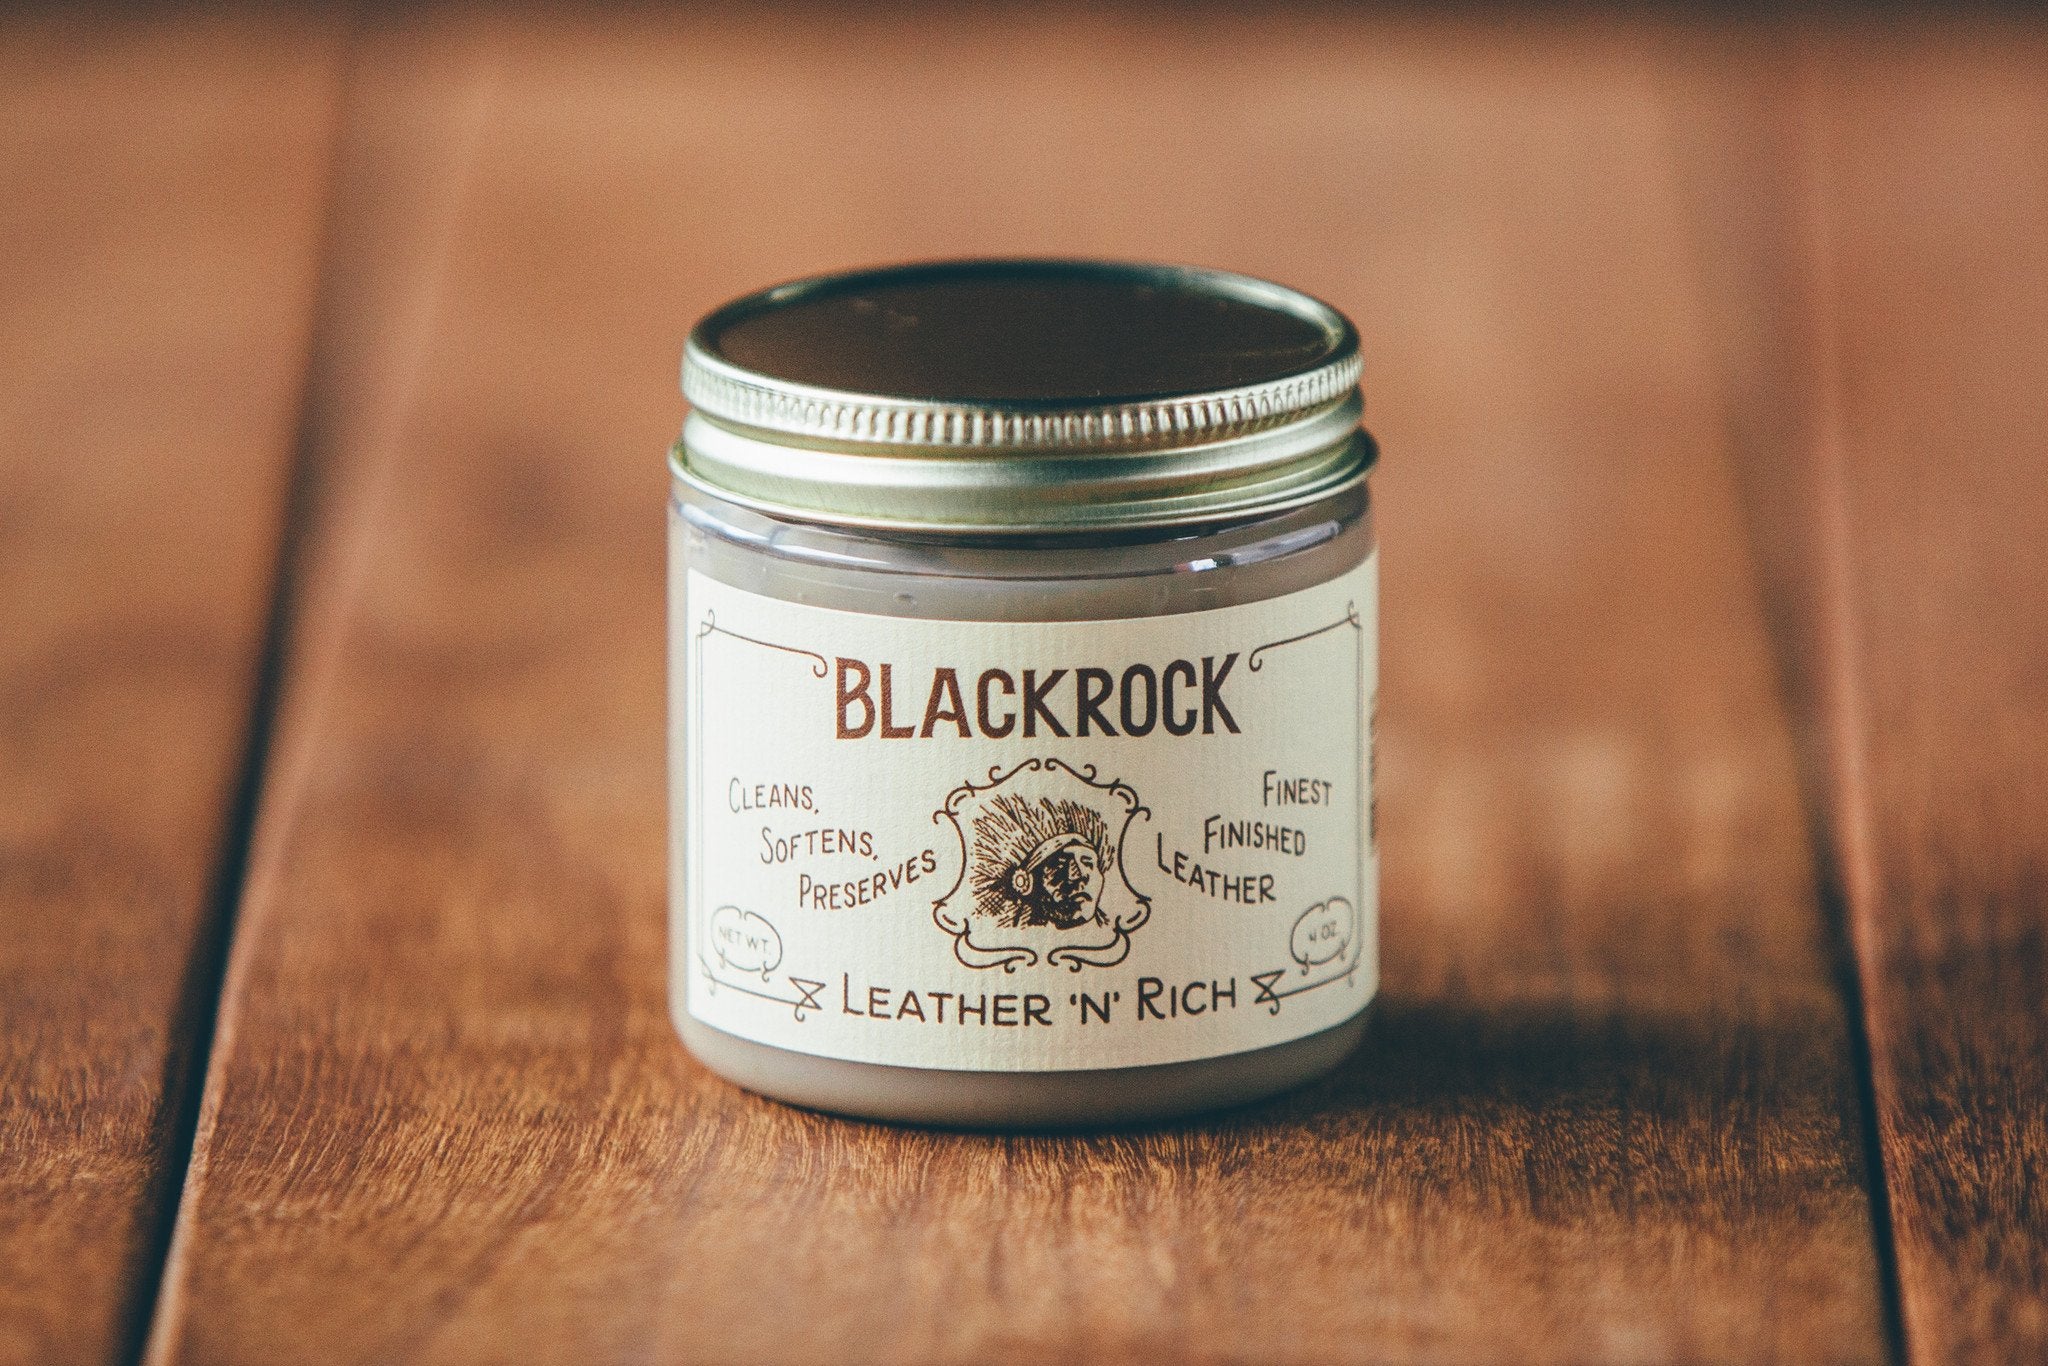 Blackrock Leather 'N' Rich Leather Care